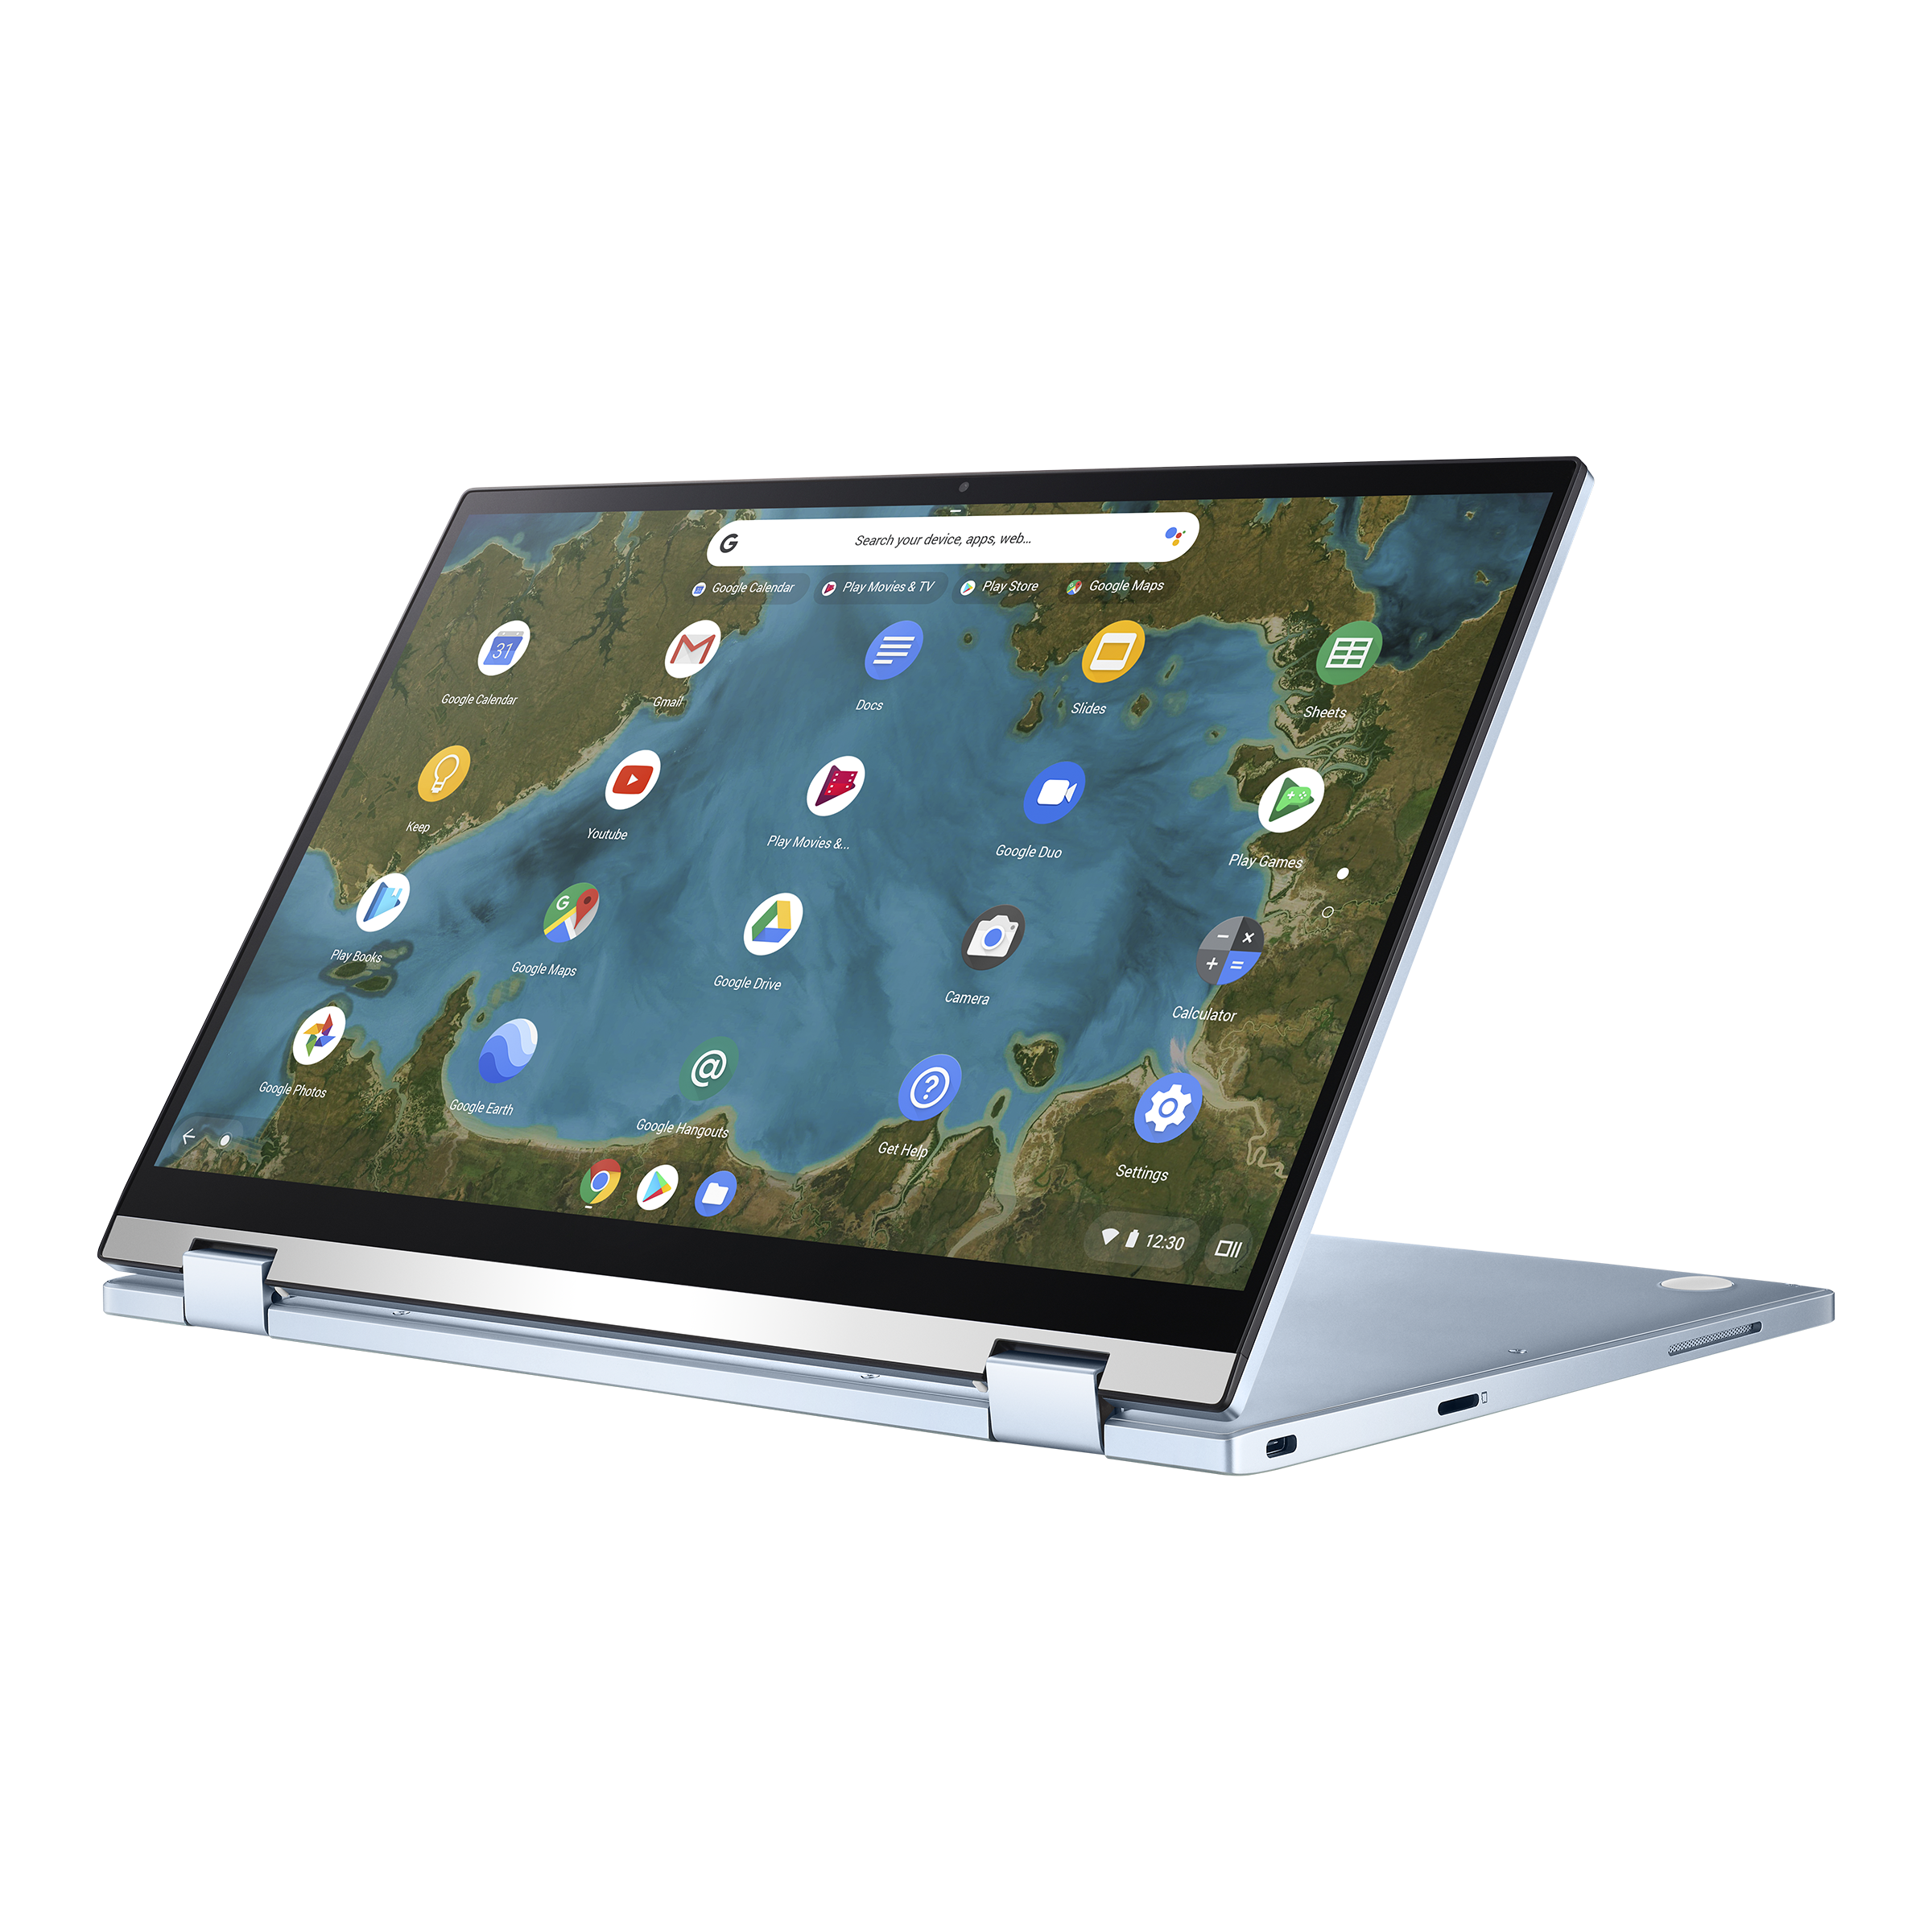 ASUS Chromebook Flip C433｜Laptops For Home｜ASUS Global